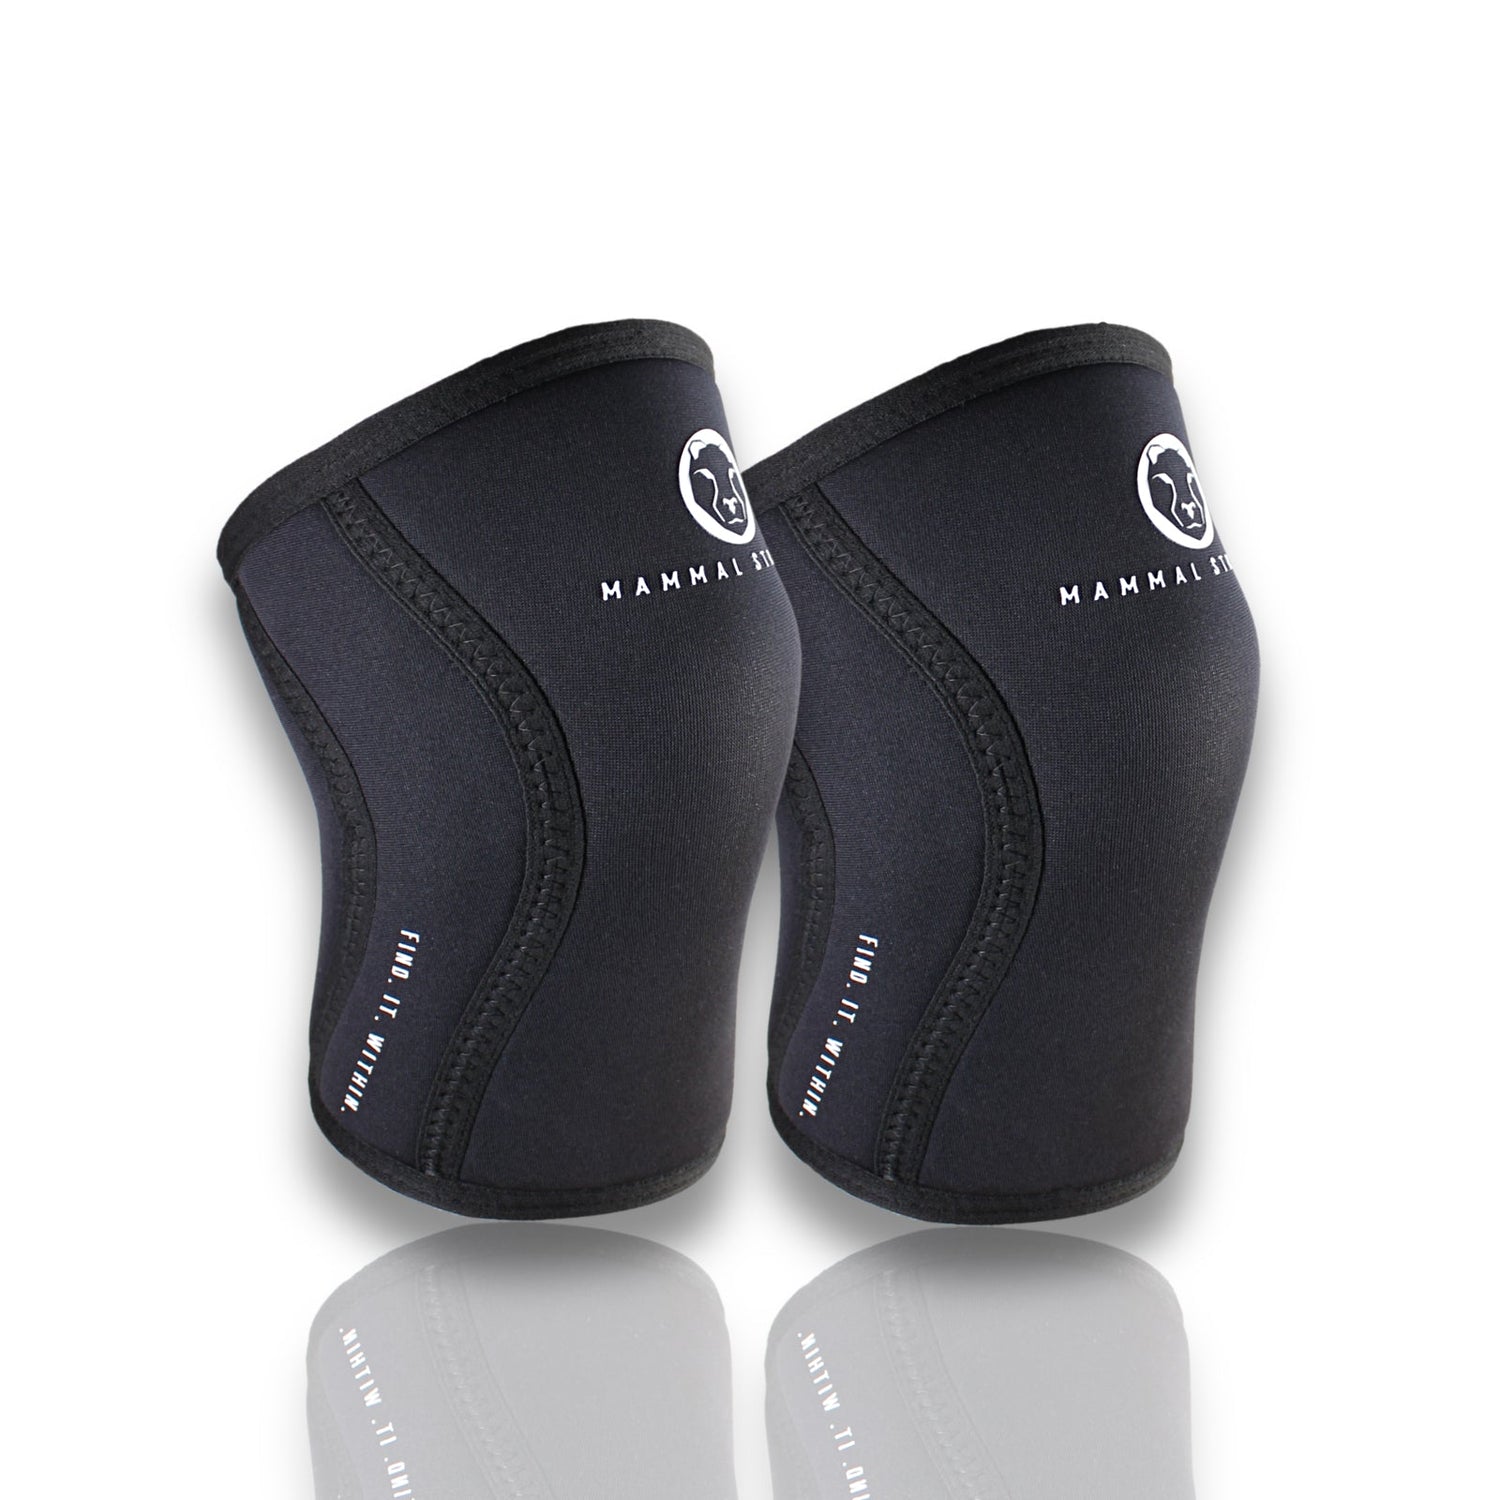 Mammal Strength Knee Sleeves V2 - 7mm Neoprene Knee Compression Support  Sleeves - Black (Pair)